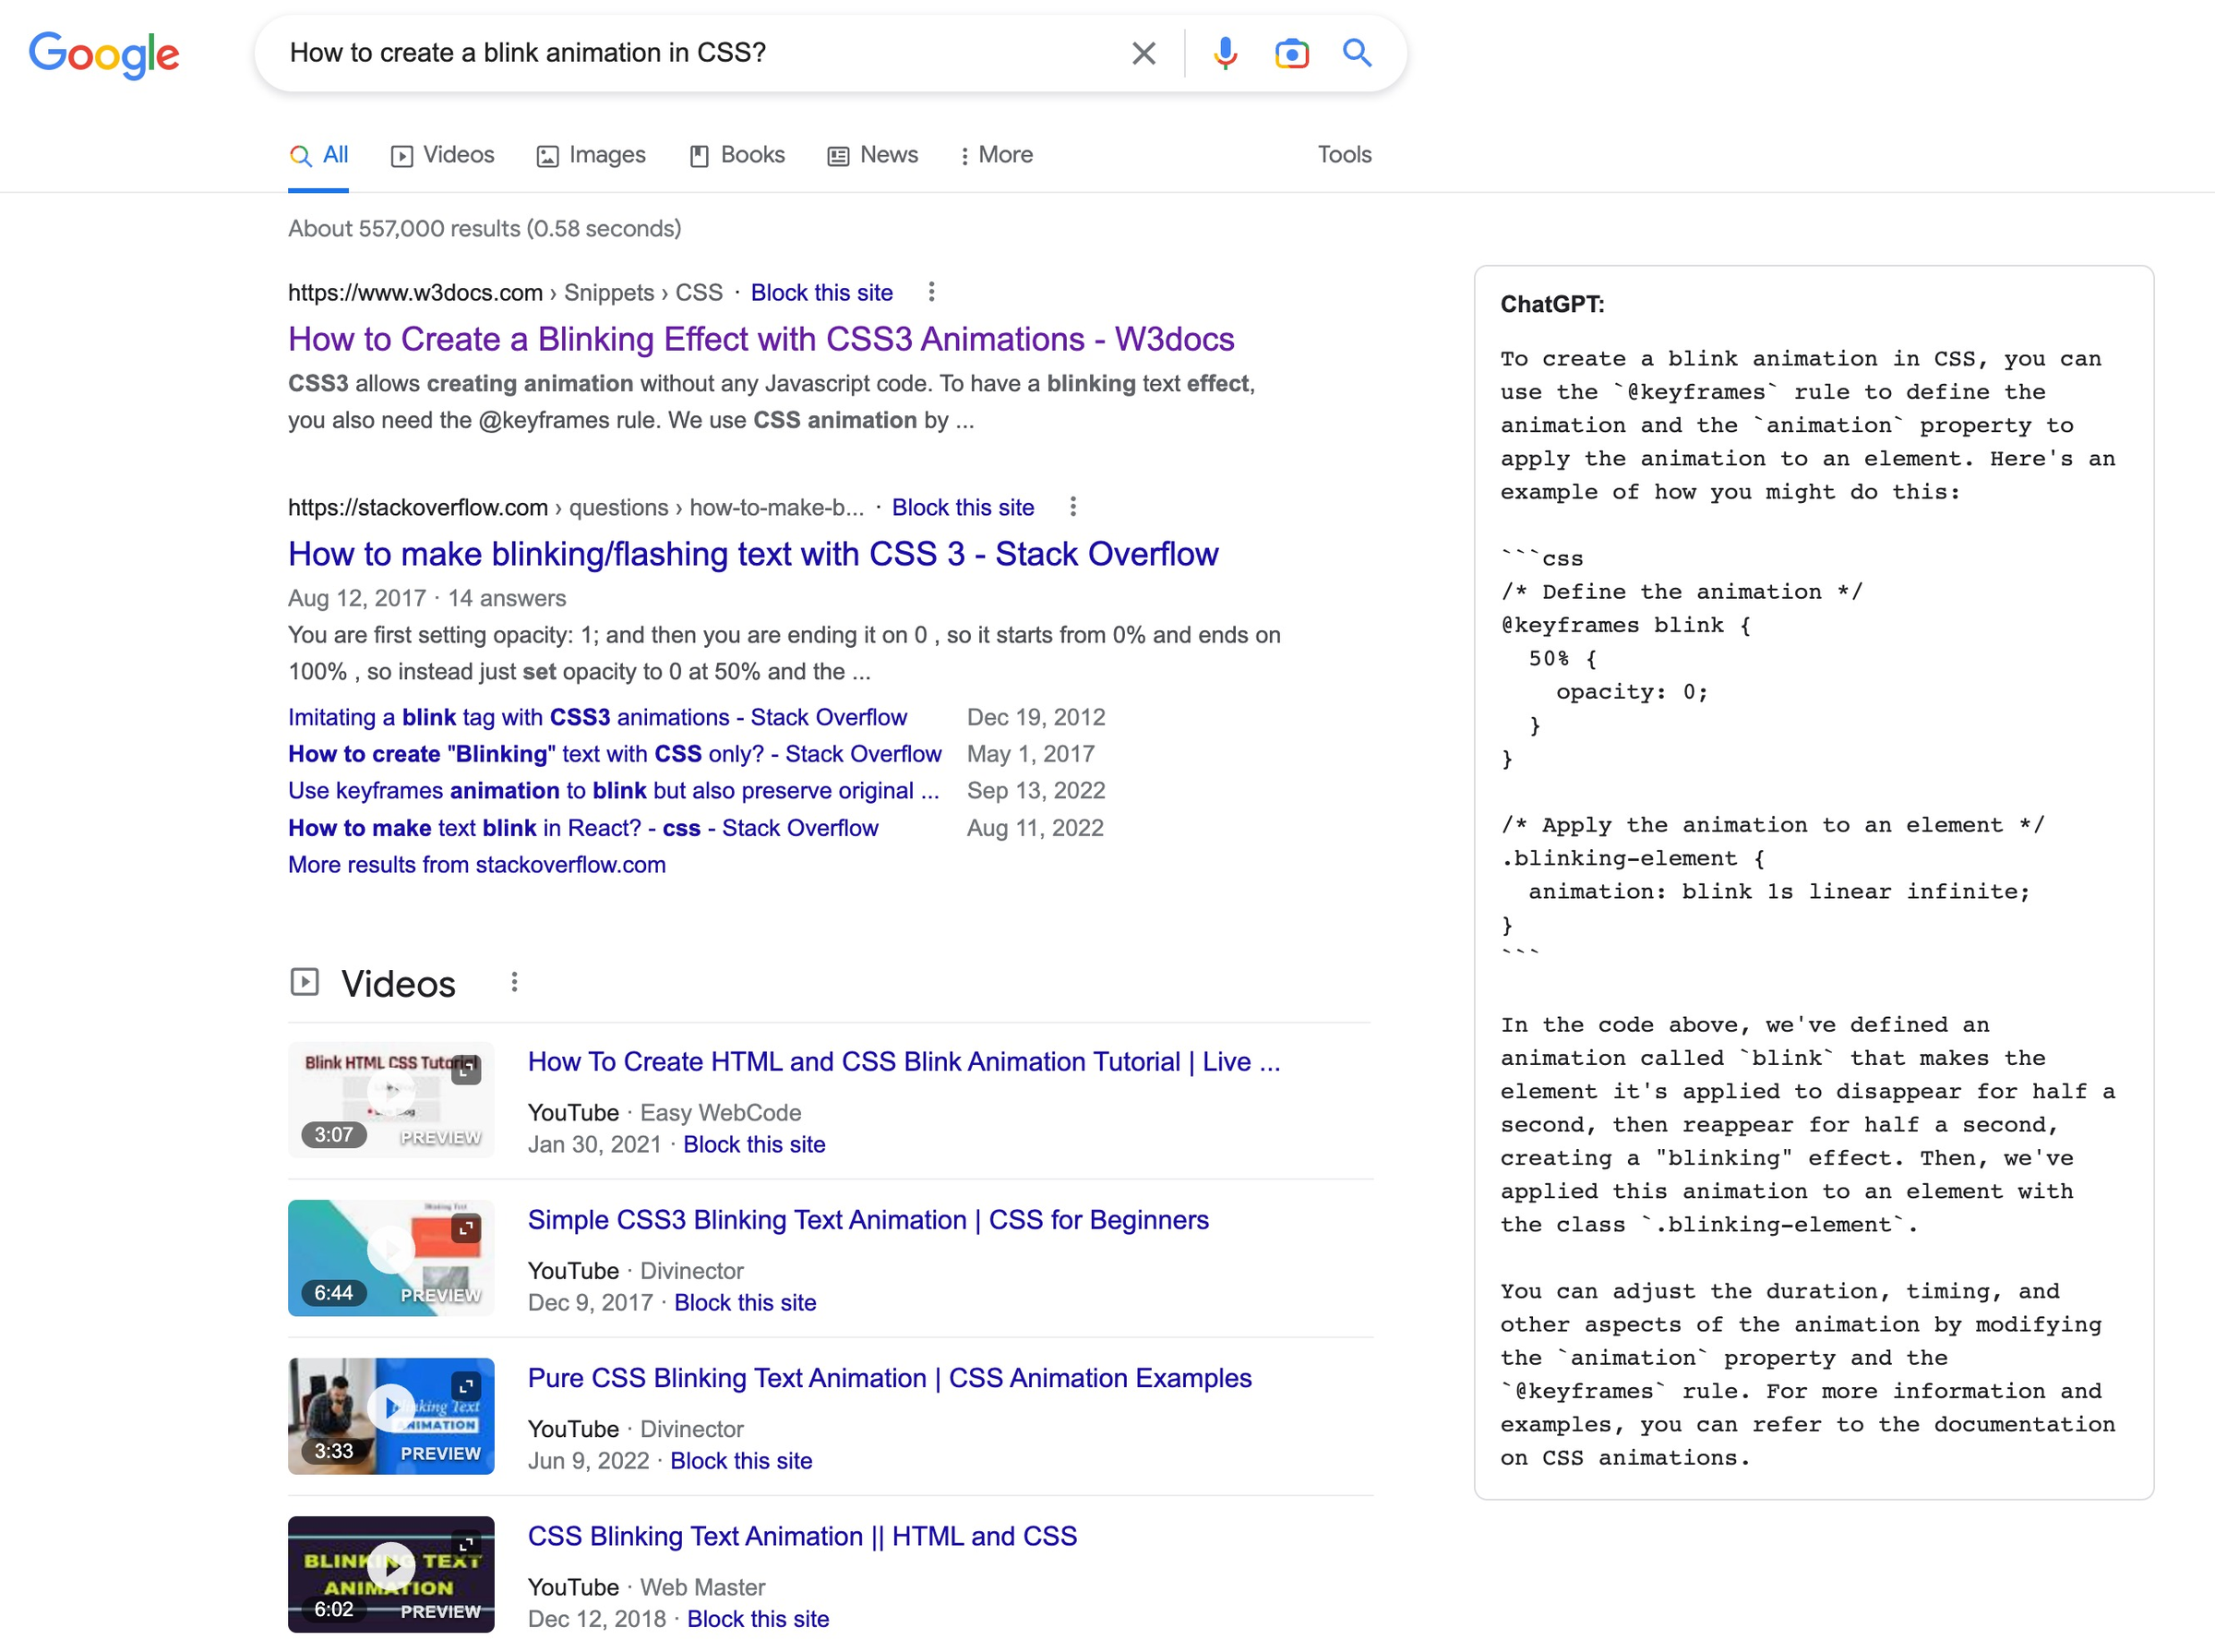 GoogleのChatGpt-検索エンジンの結果と一緒にchatgpt応答